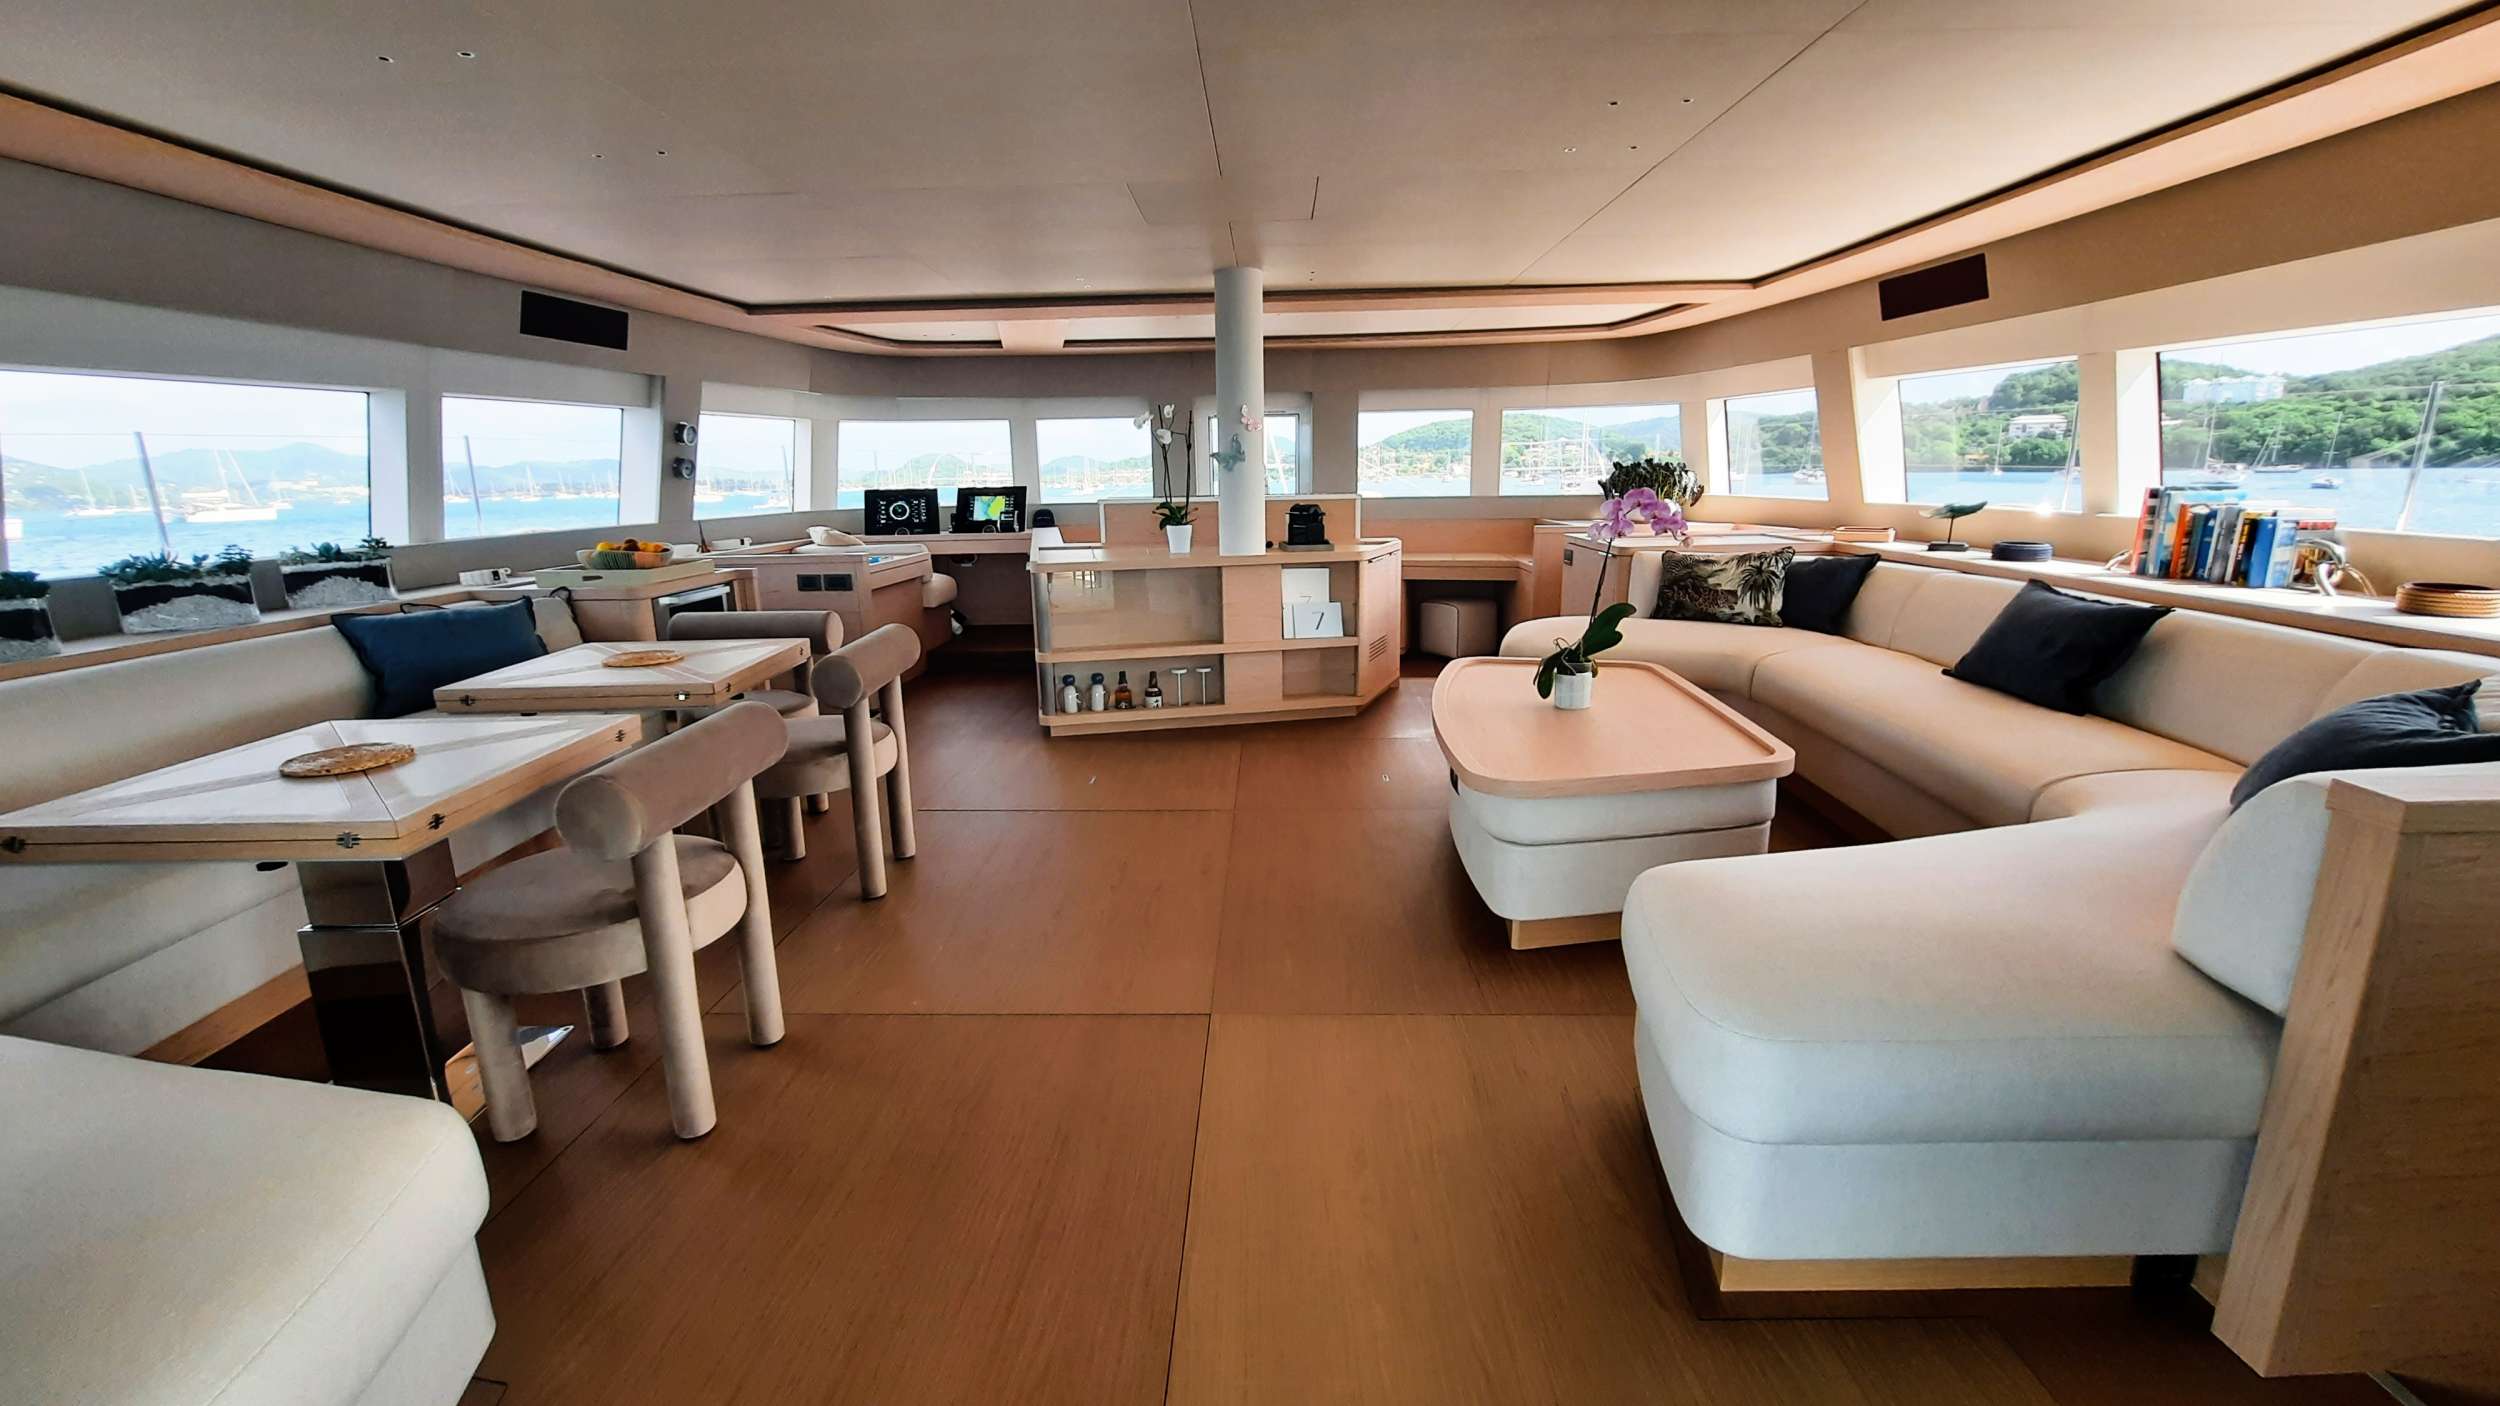 MANE et NOCTE - Luxury yacht charter Maldives & Boat hire in Indian Ocean & SE Asia 3